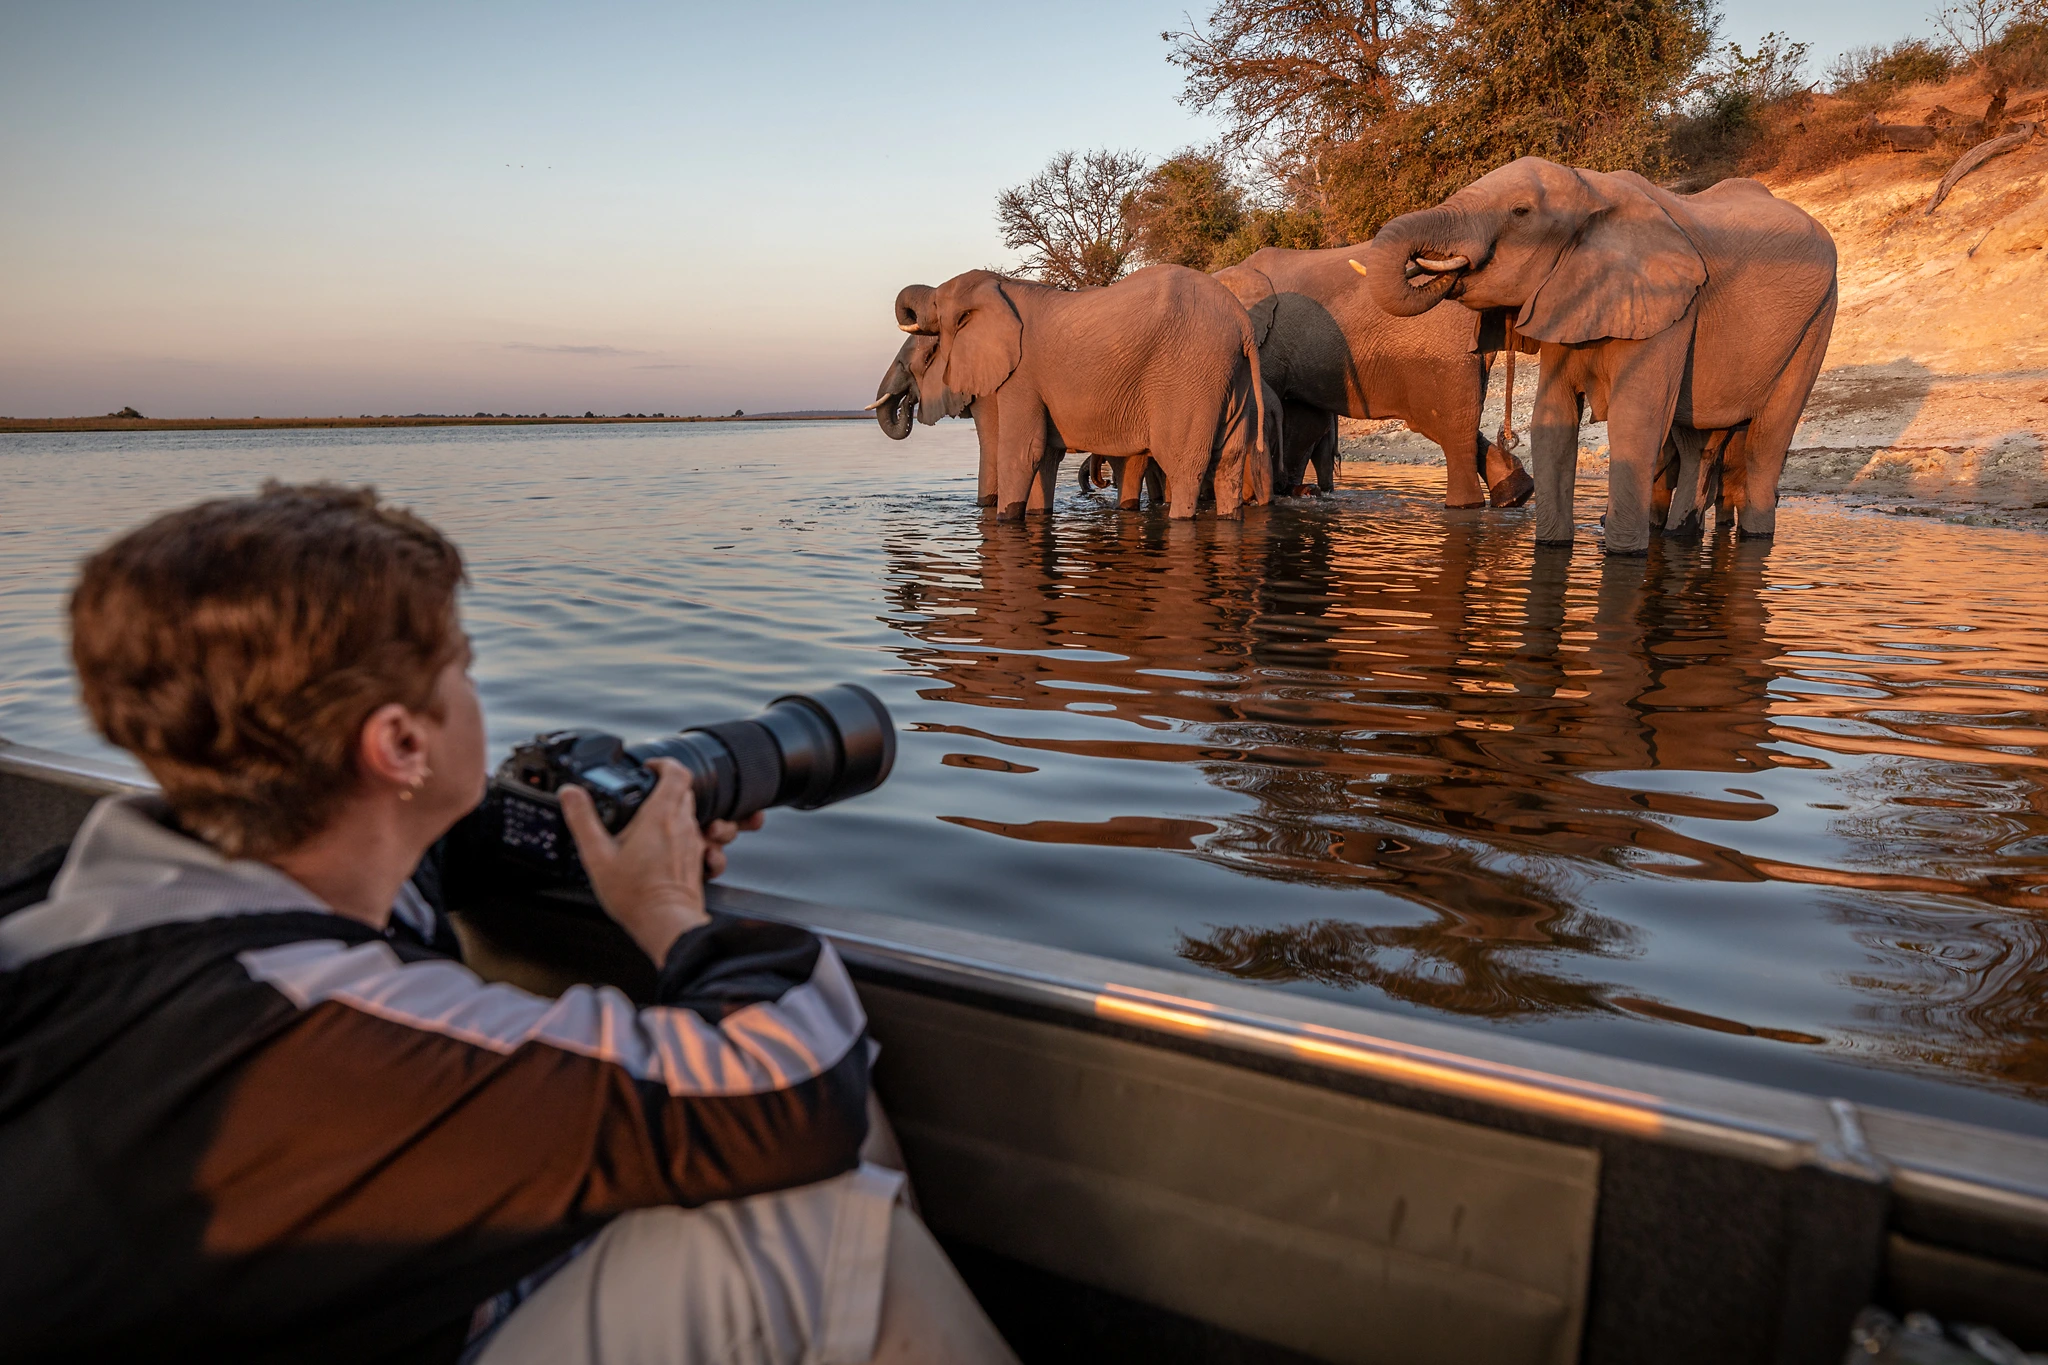 Pangolin photo safaris guest on the Chobe river in Botswana